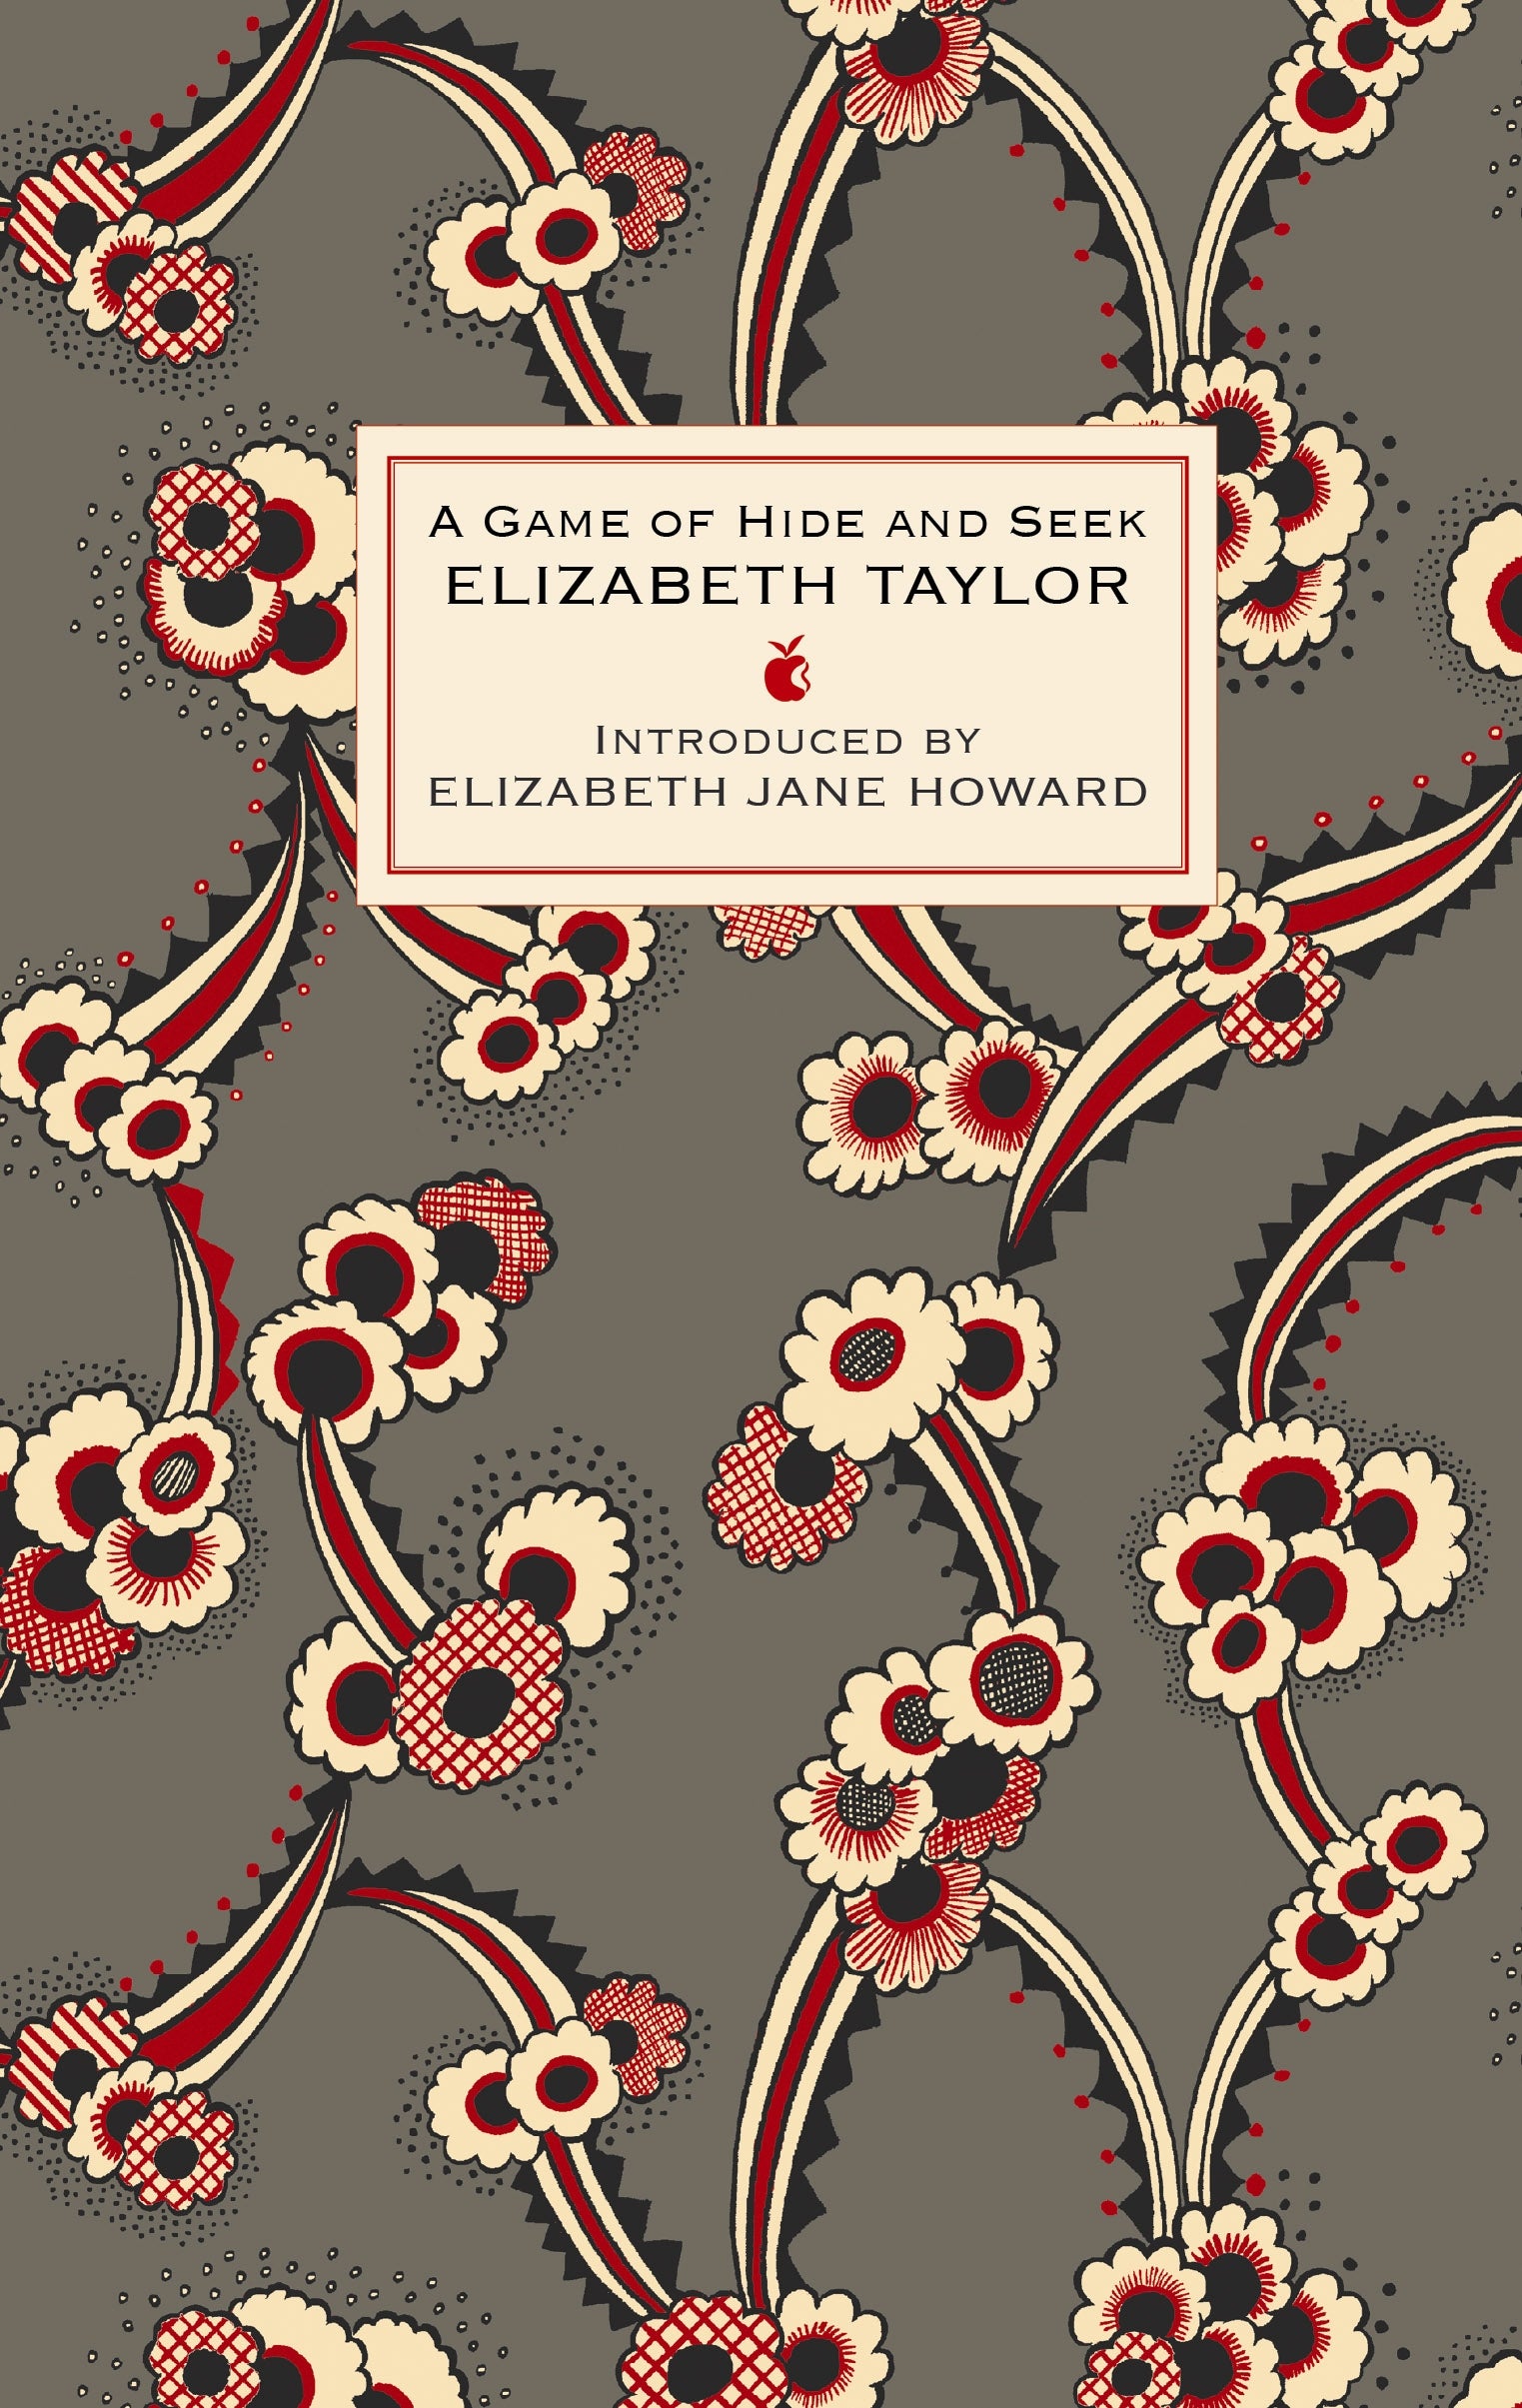 A Game Of Hide And Seek by Elizabeth Taylor